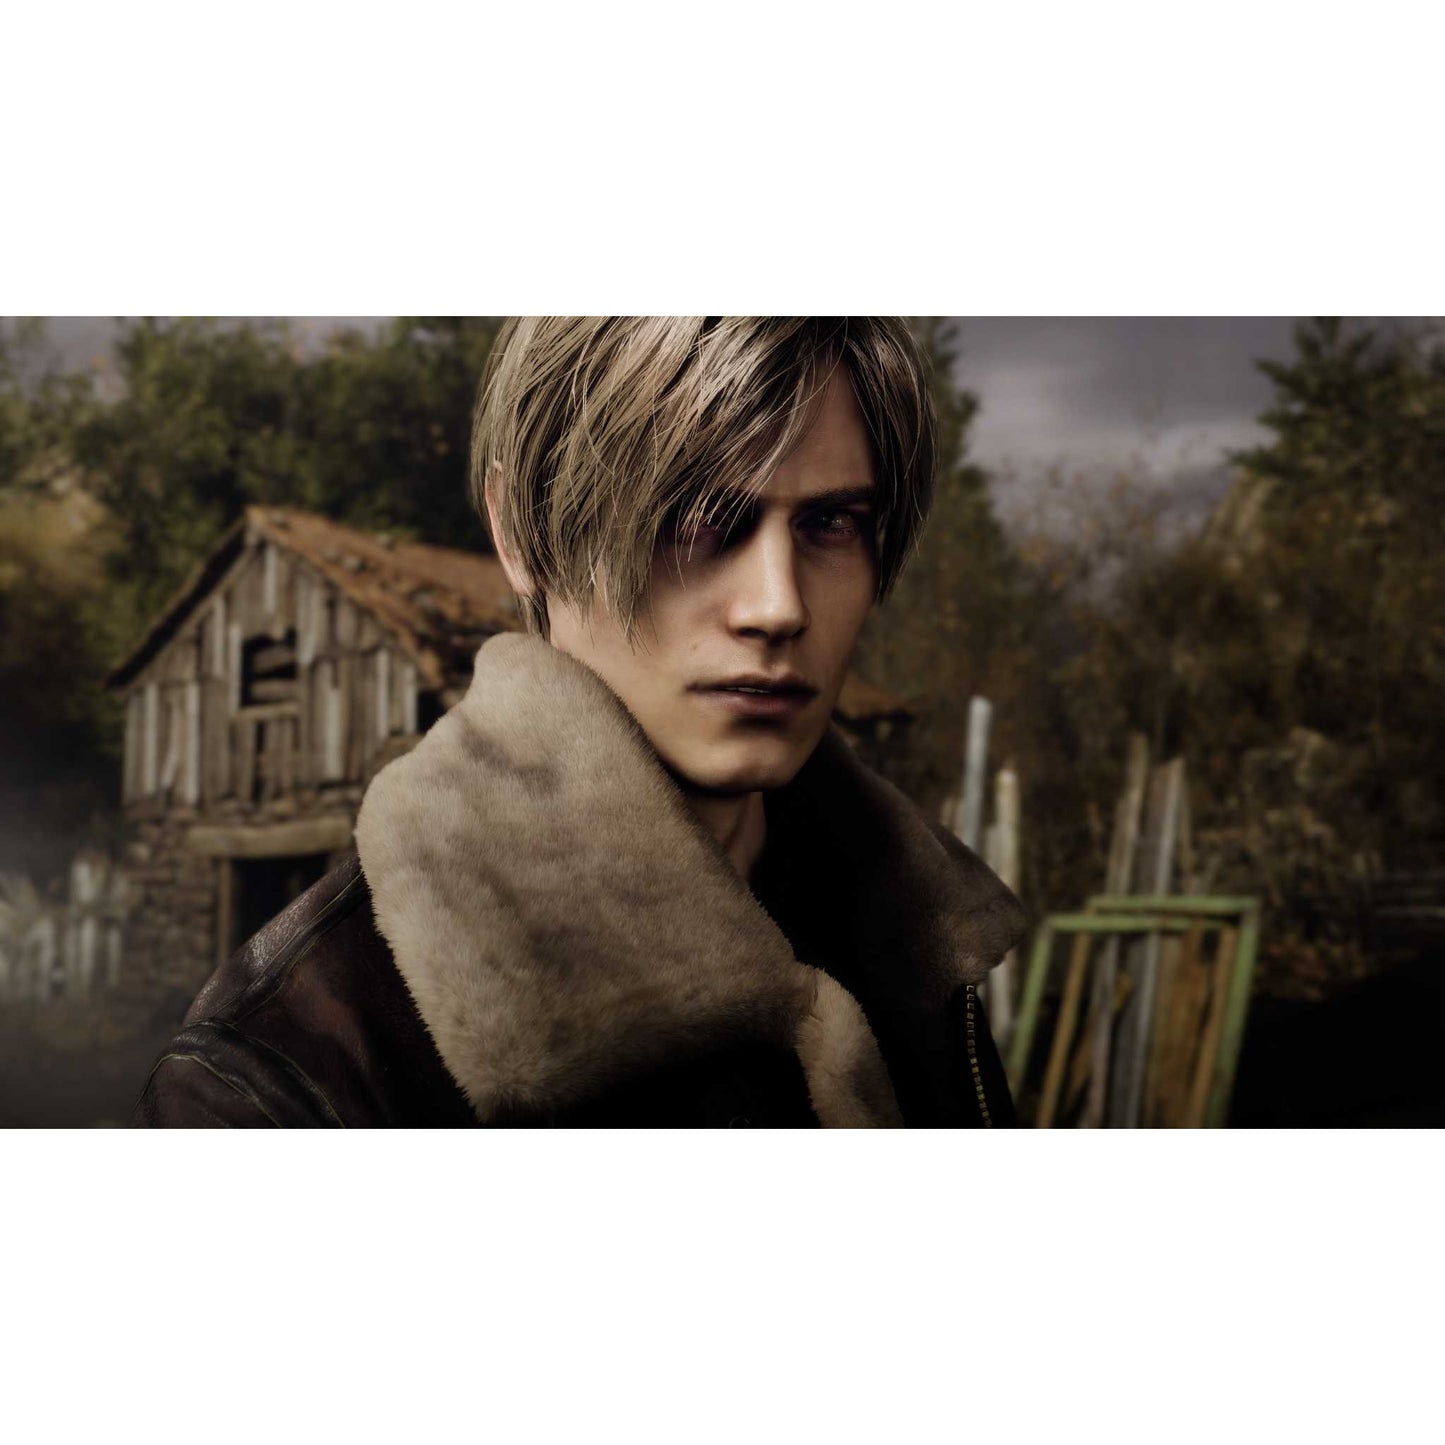 Resident Evil 4 Remake – Xbox Series X